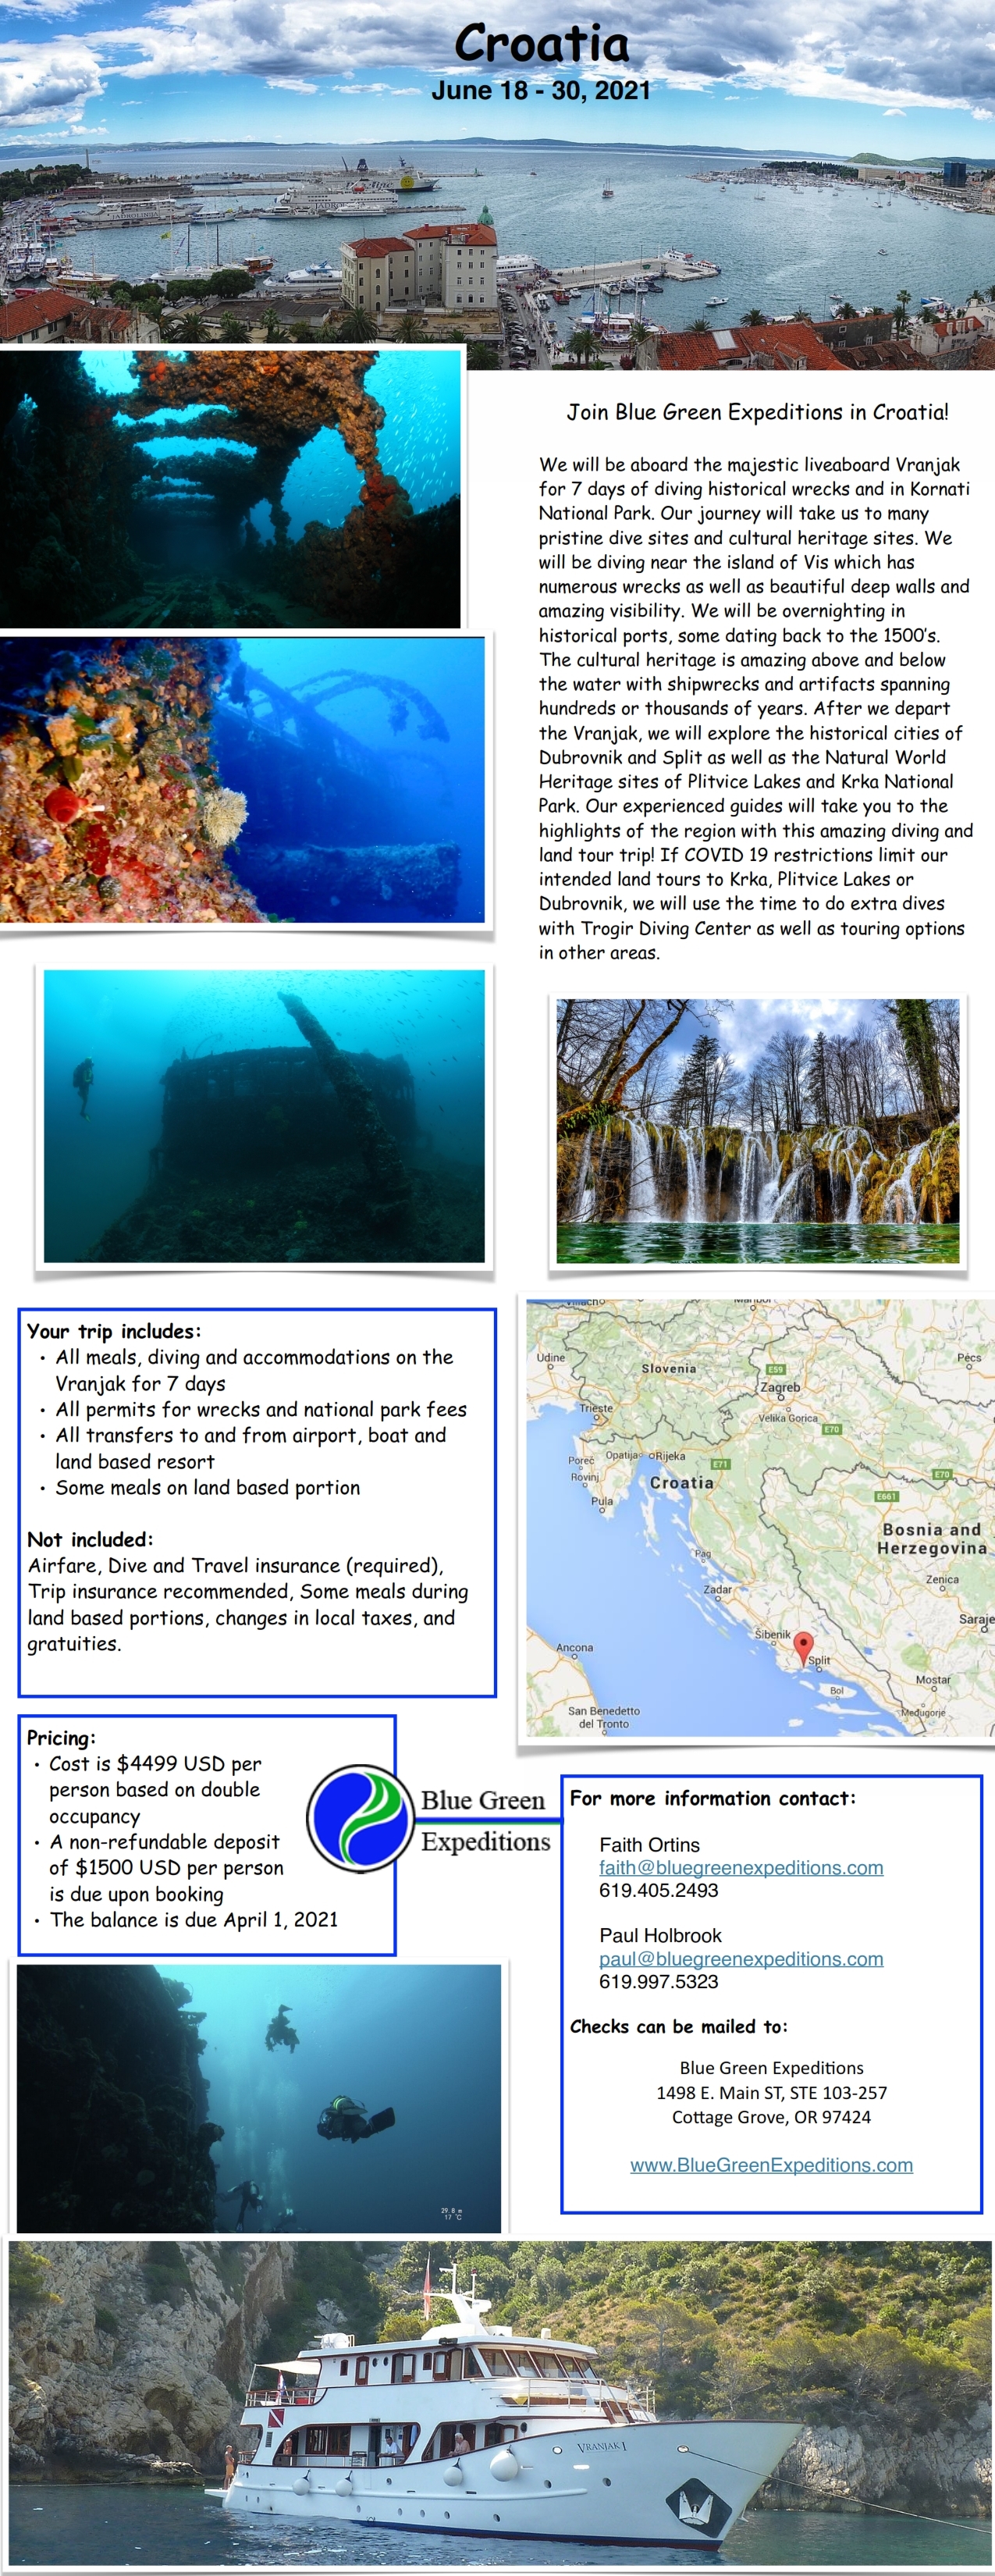 Croatia Recreational trip: June 18-30, 2021